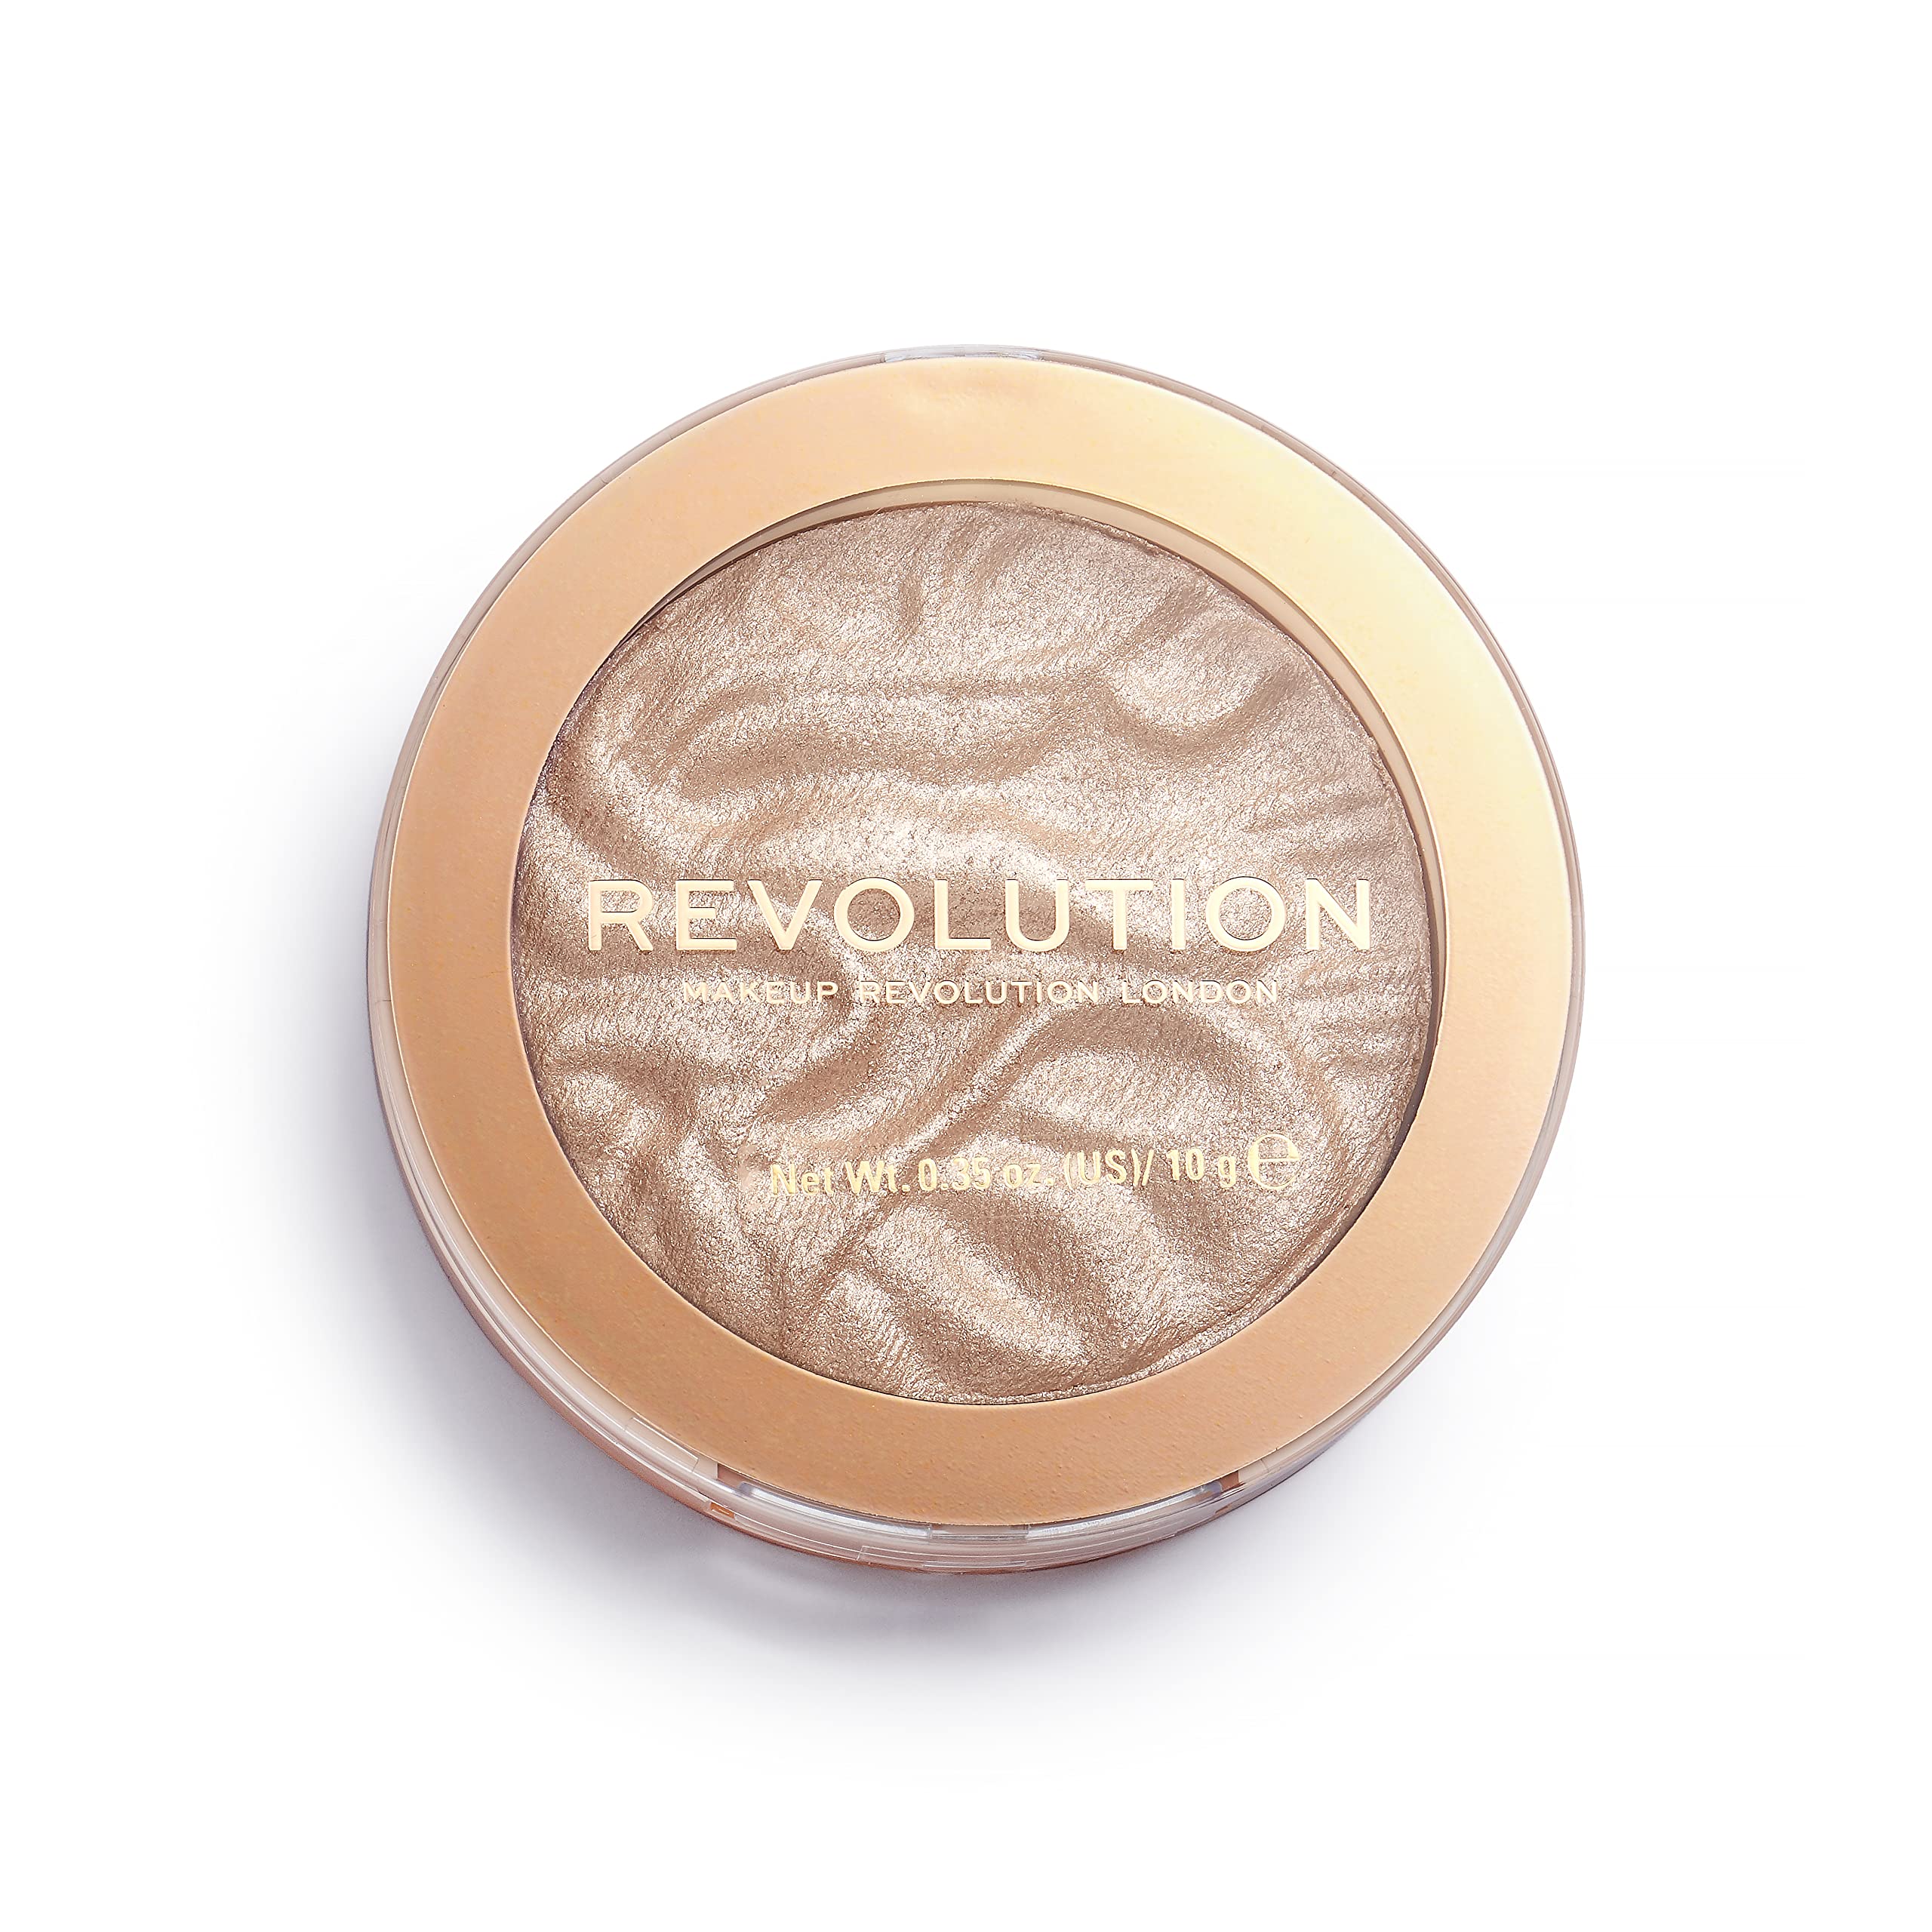 Makeup Revolution Highlight Reloaded, Pigment Rich & Silky Formula, Cruelty-Free & Vegan, Dare to Divulge, 0.35 Oz